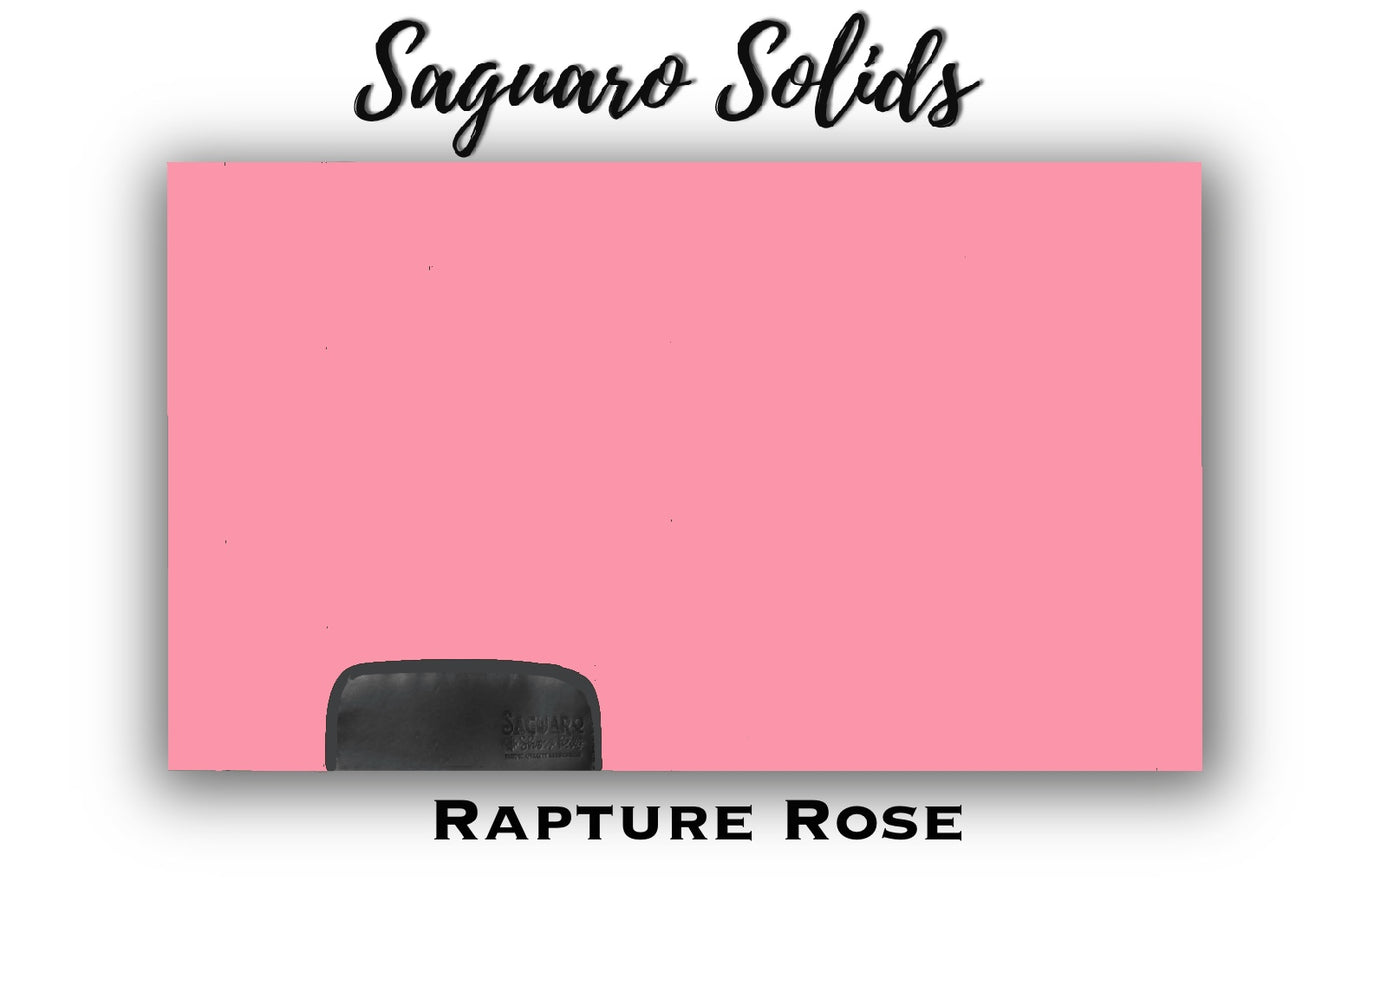 Saguaro Solid "Rapture Rose" Show Pad (SEMI-CUSTOM)